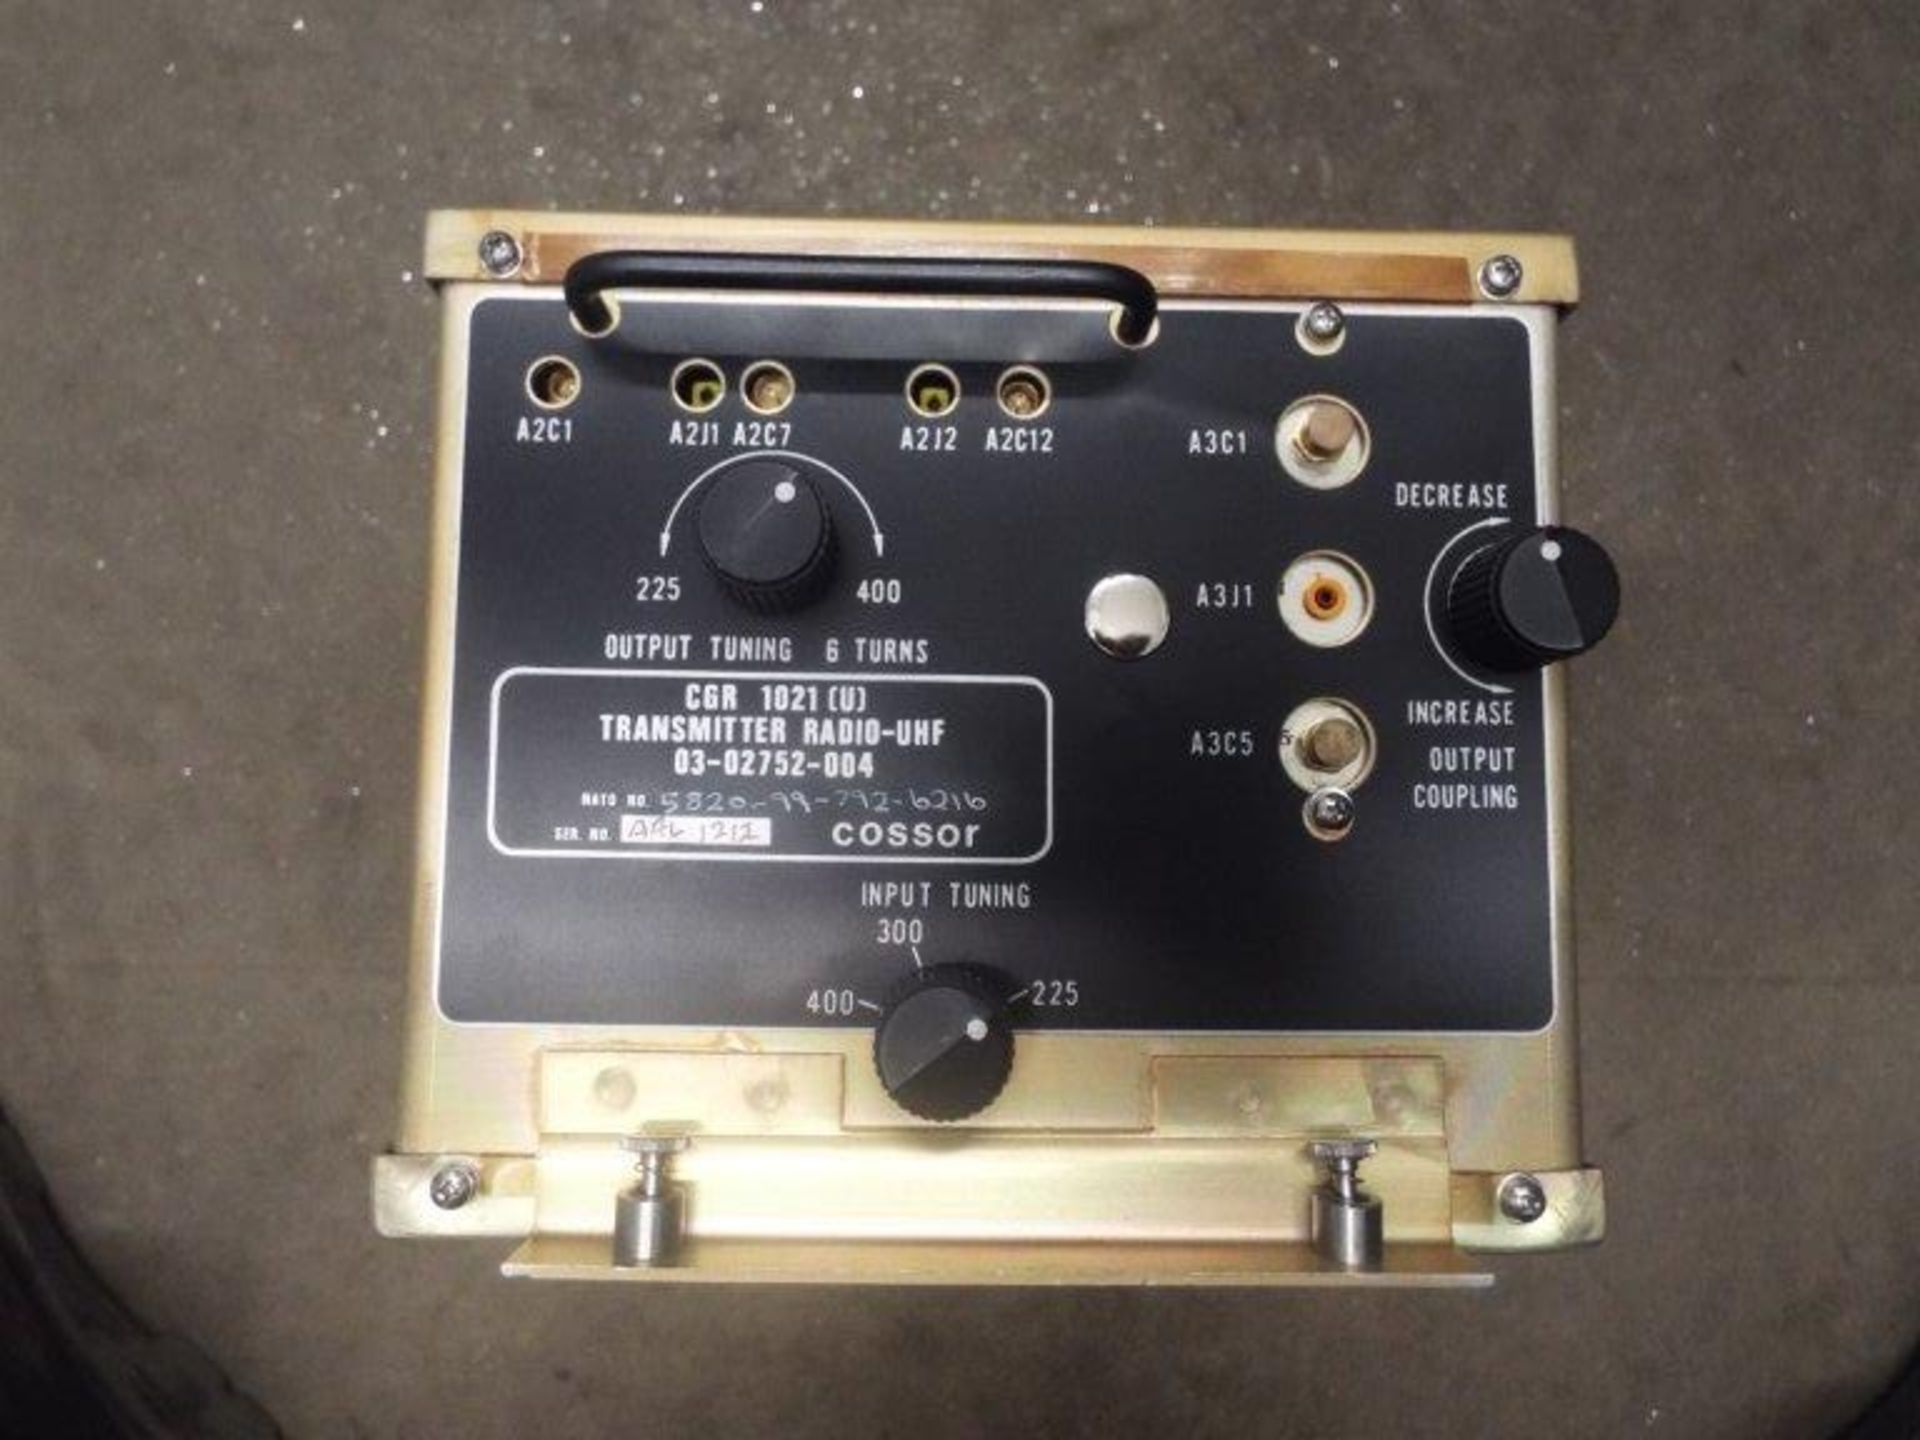 Cossor CGR 1021(U) UHF Radio Transmitter